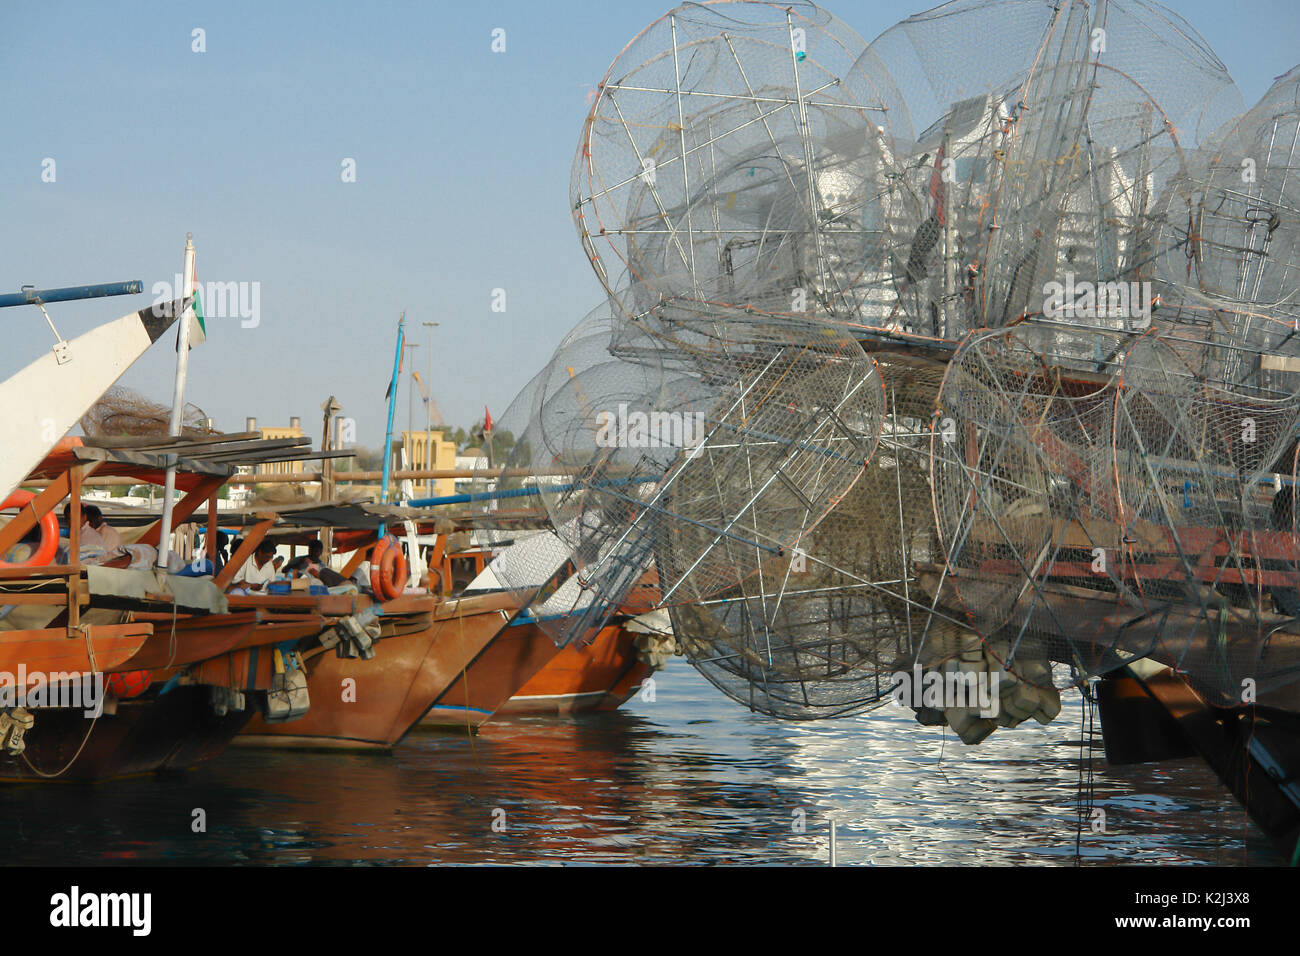 Abu Dhabi Szenen Stockfoto